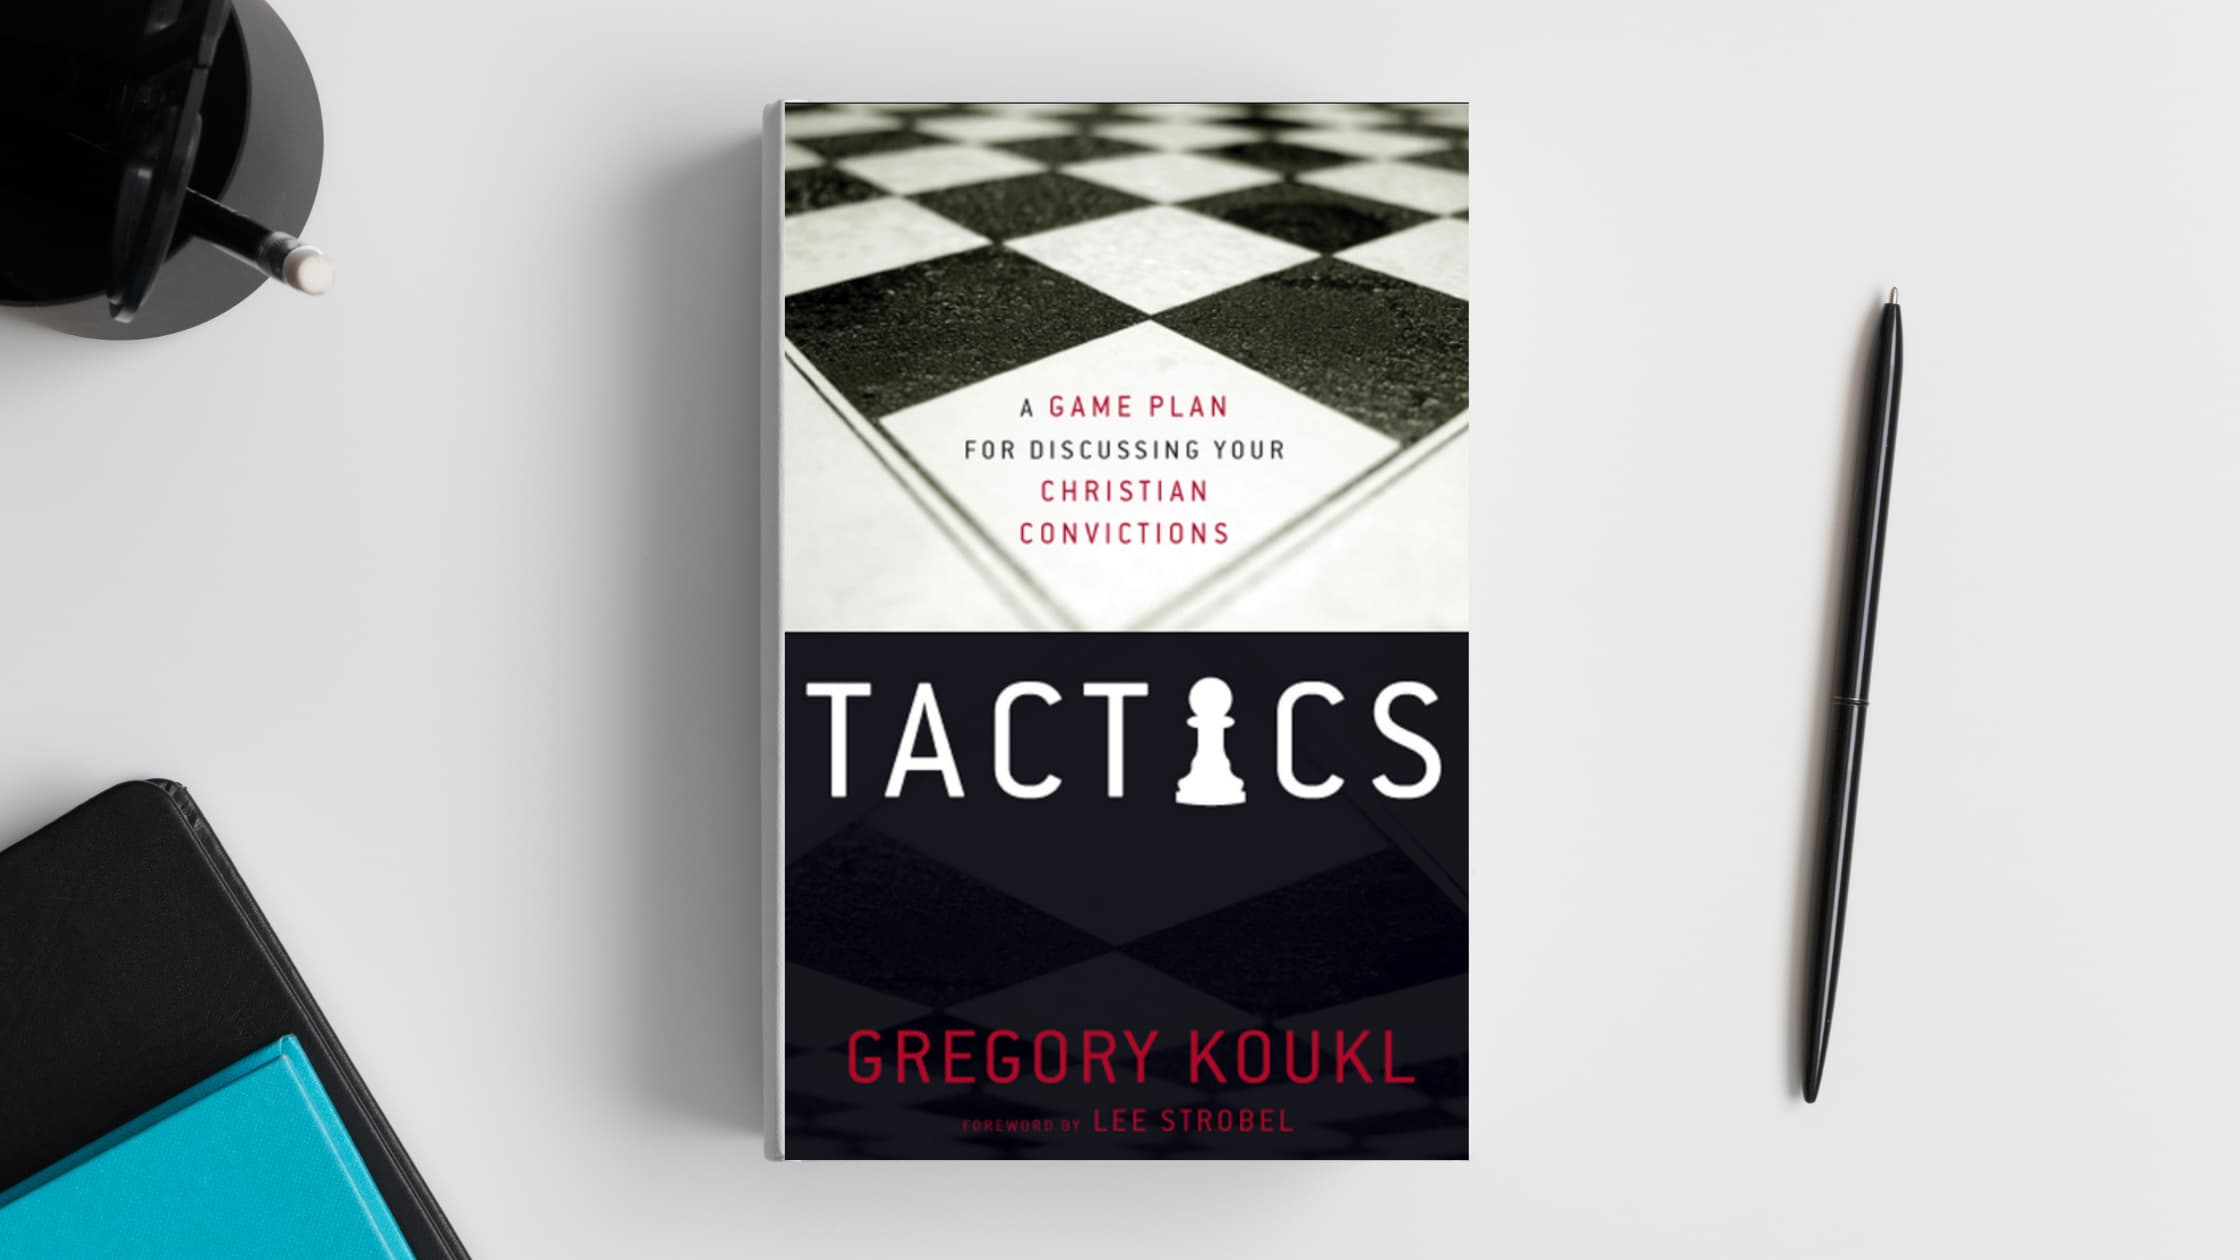 Tactics by Gregory Koukl